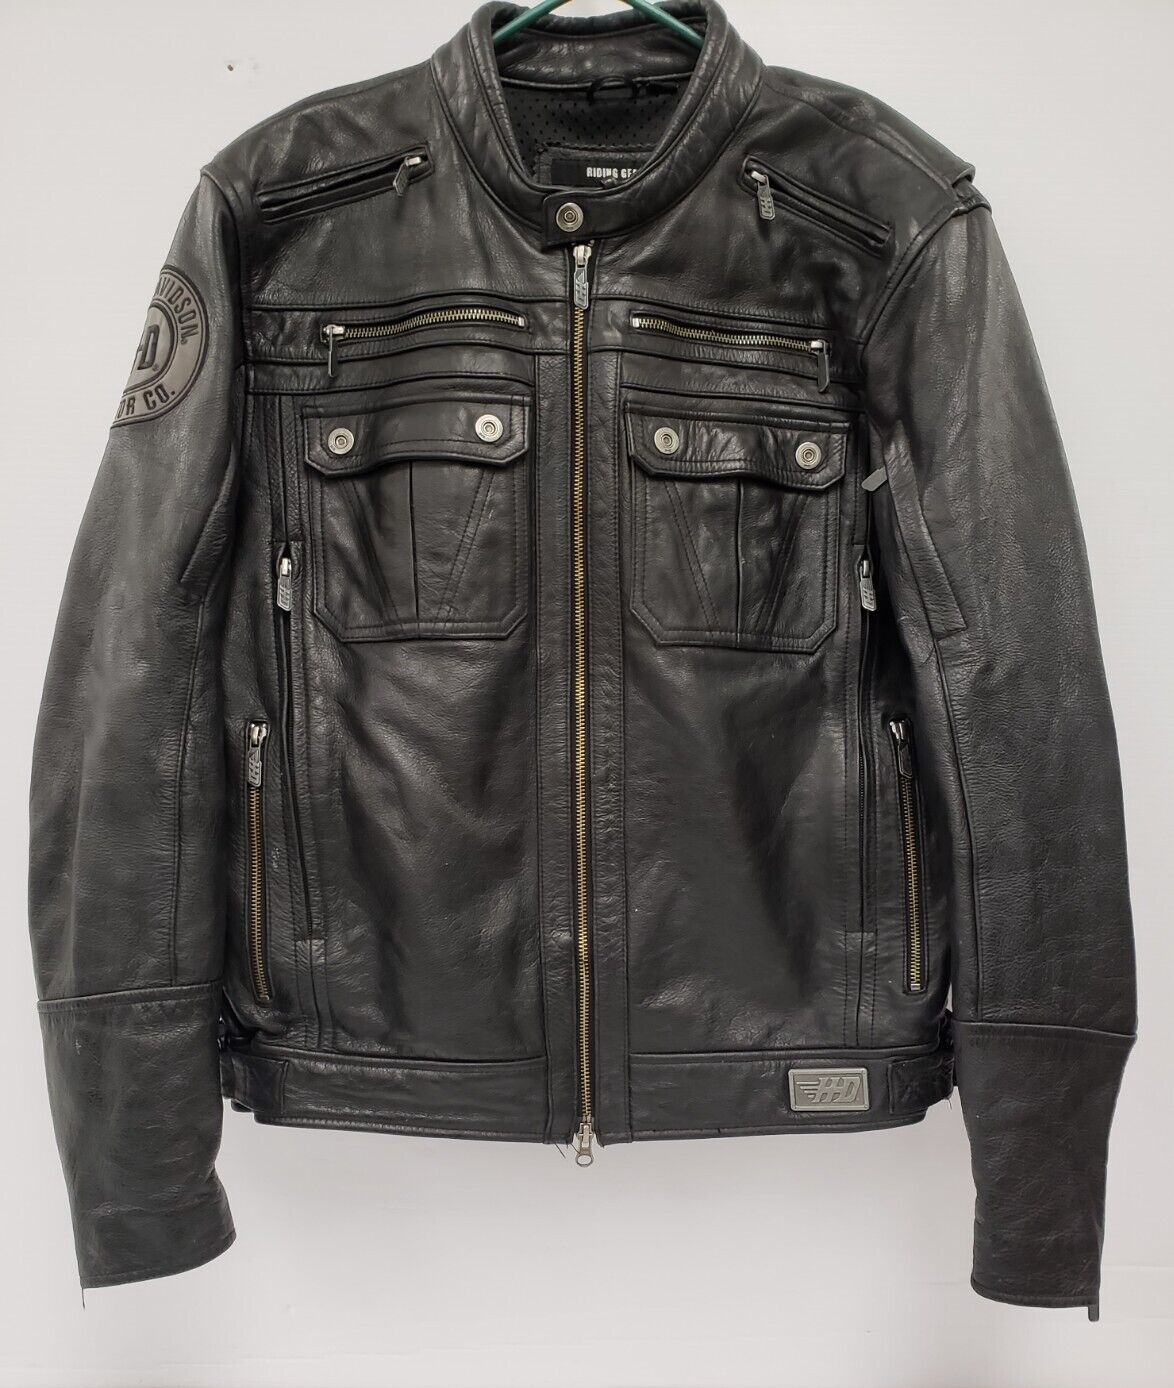 (57017-1) Harley Davidson GM00039377 Jacket - Size Large